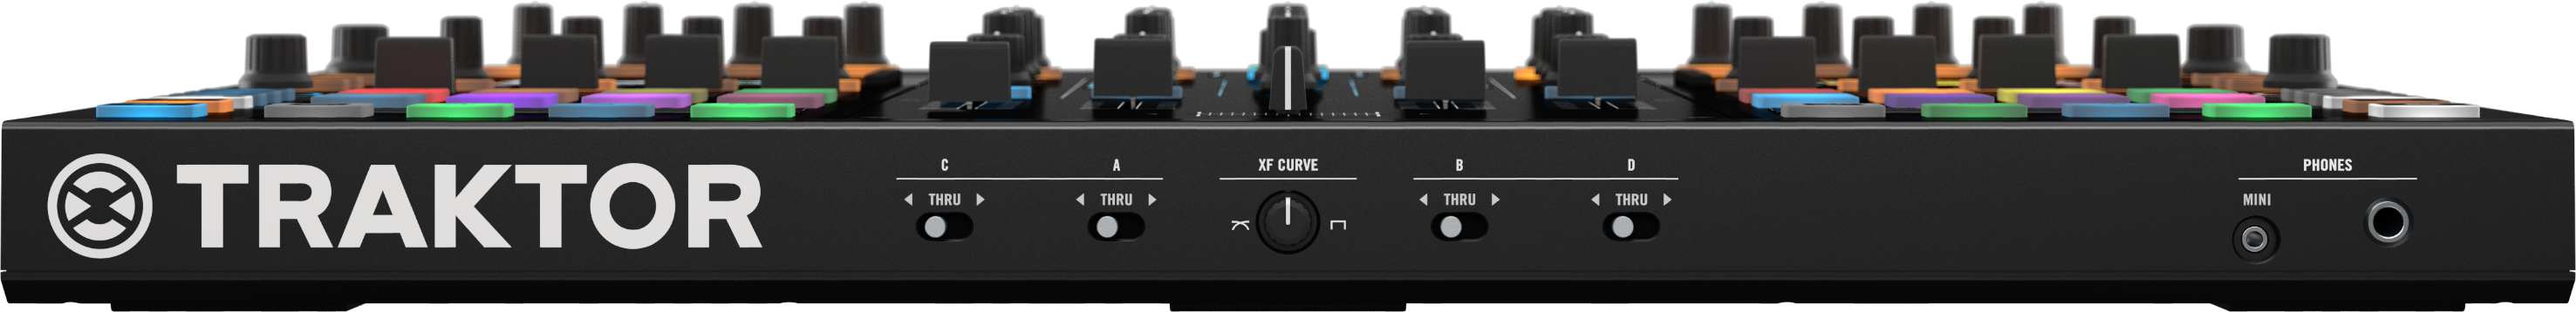 Native Instruments Traktor Kontrol S8 - USB DJ-Controller - Variation 1